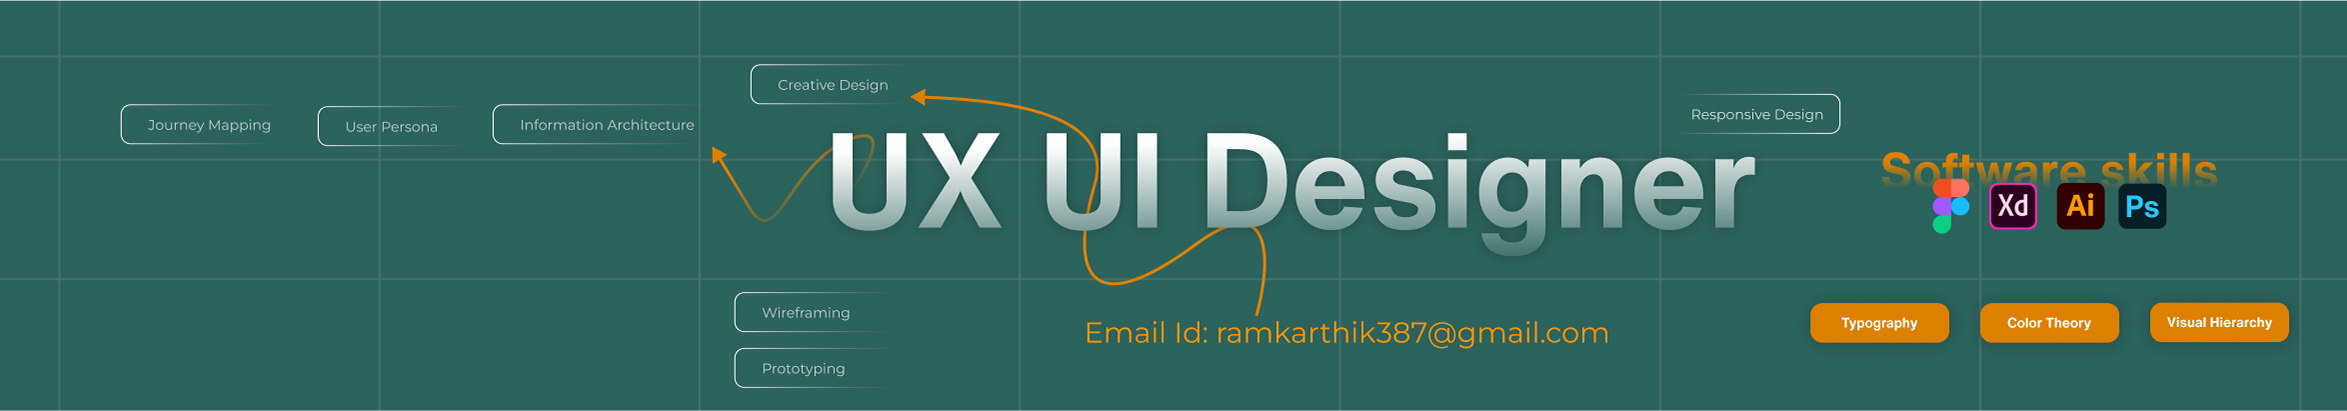 Karthik Ram UX/UI Designer's profile banner